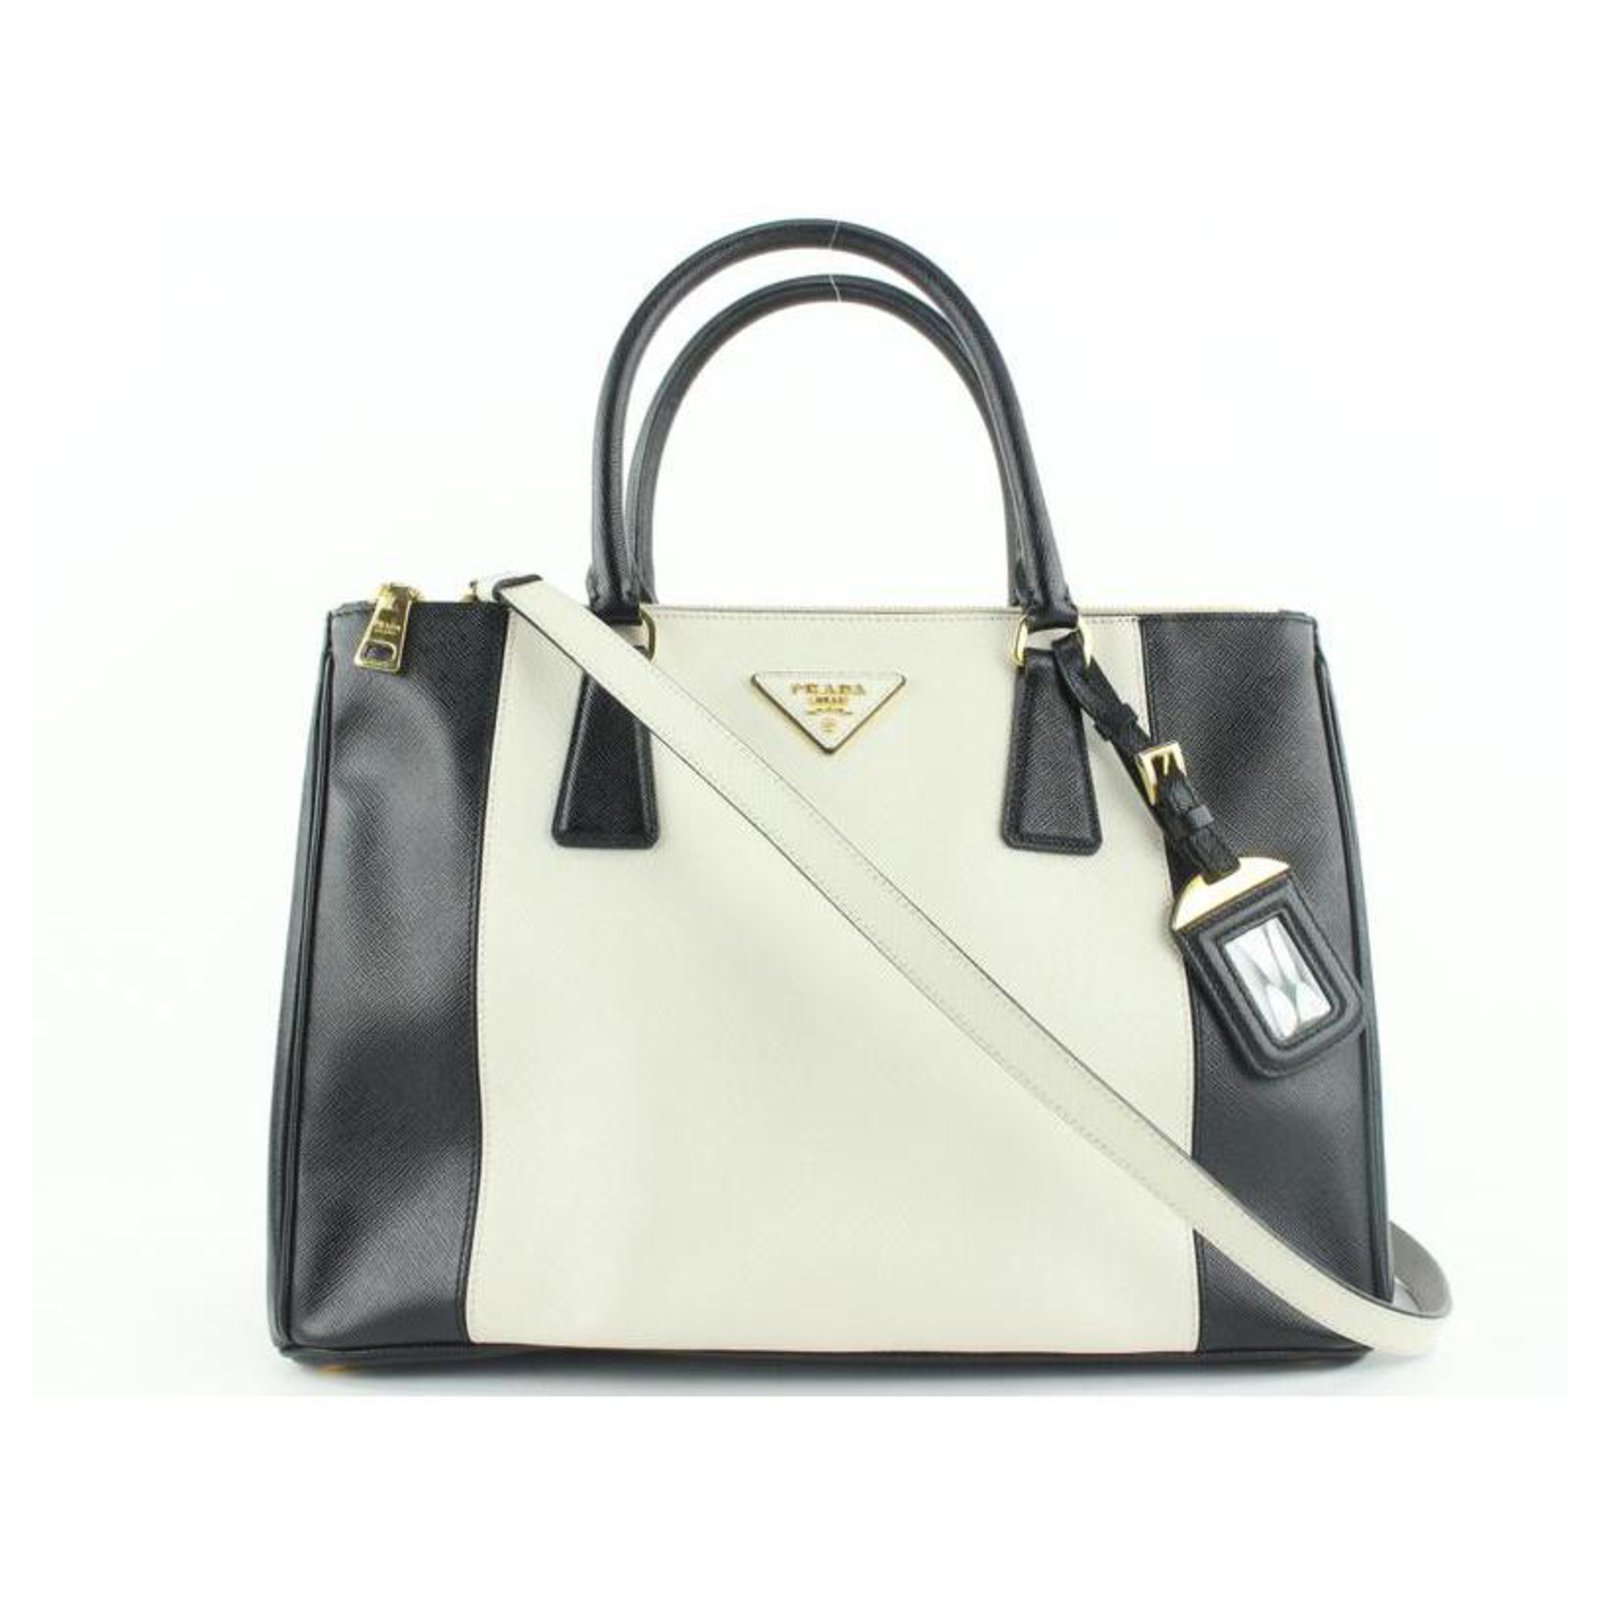 Prada Saffiano Lux Medium Satchel Handbag